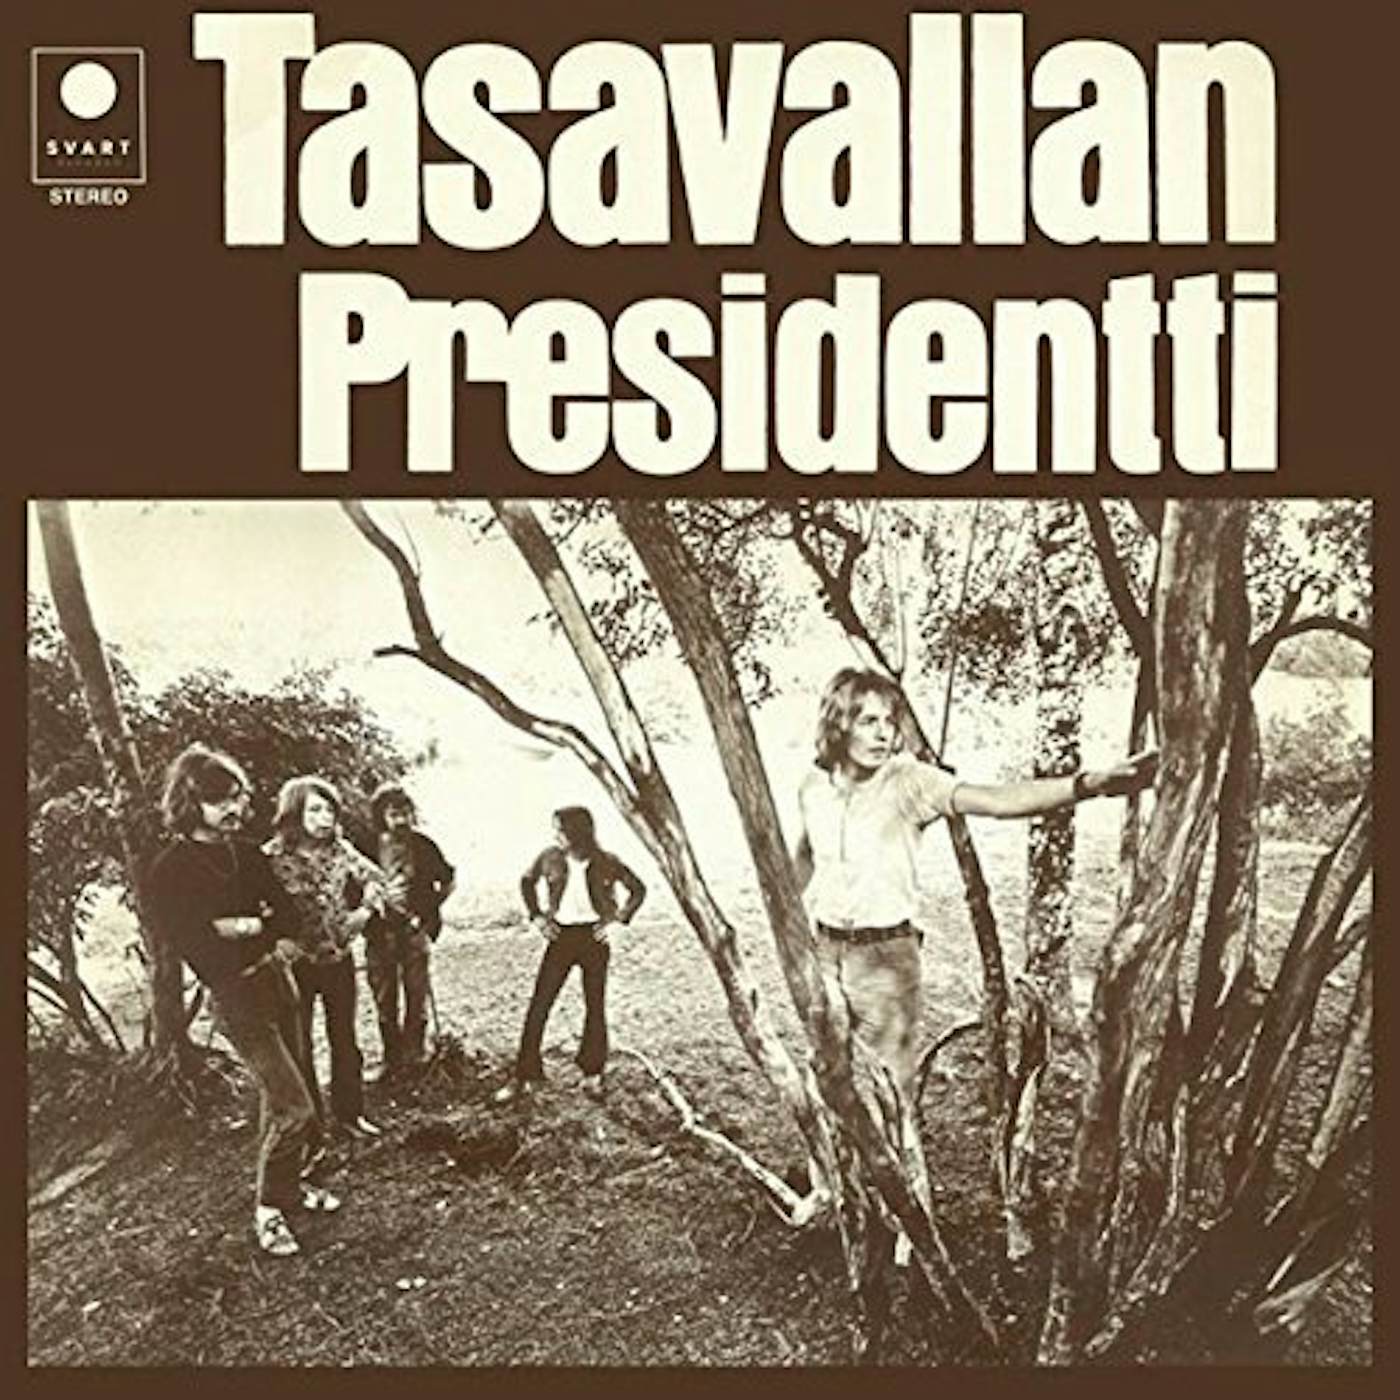 Tasavallan Presidentti II (GER) Vinyl Record